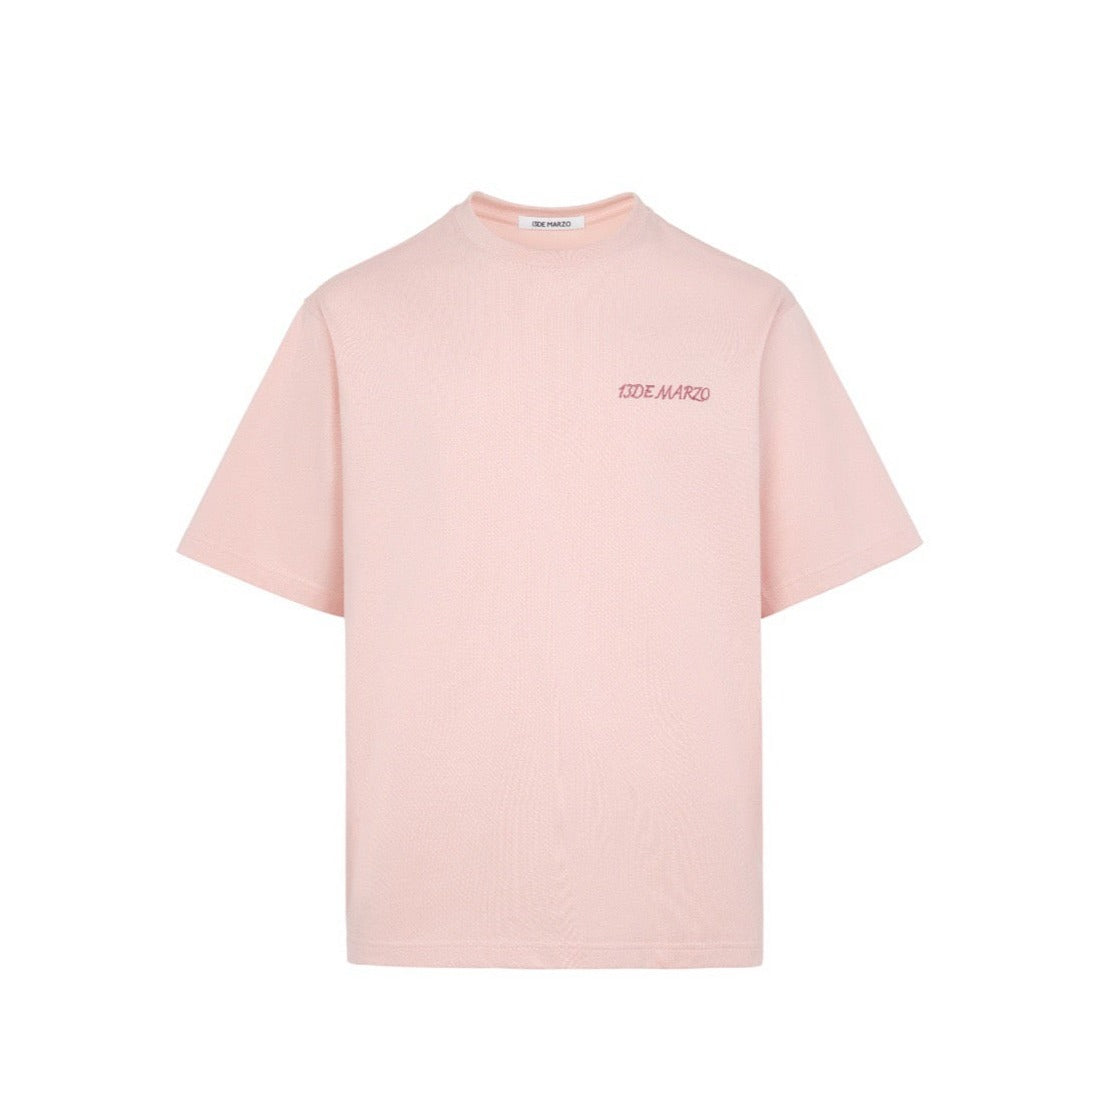 MARZO Fixxshop Rose Doozoo – Veiled Luminous Original 13DE T-shirt